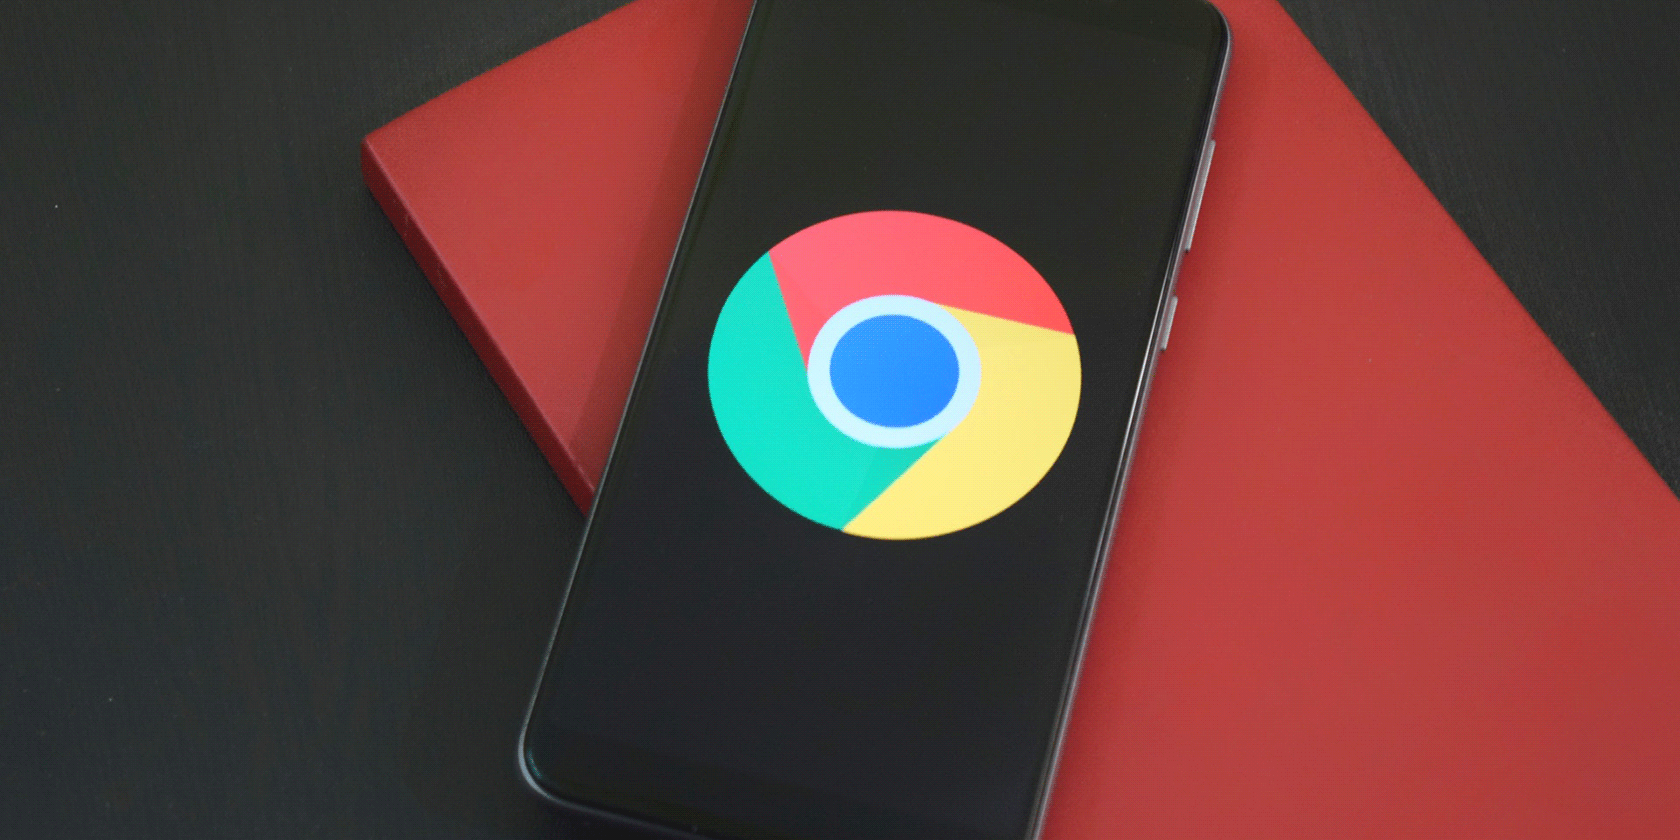 Chrome on a smartphone logo